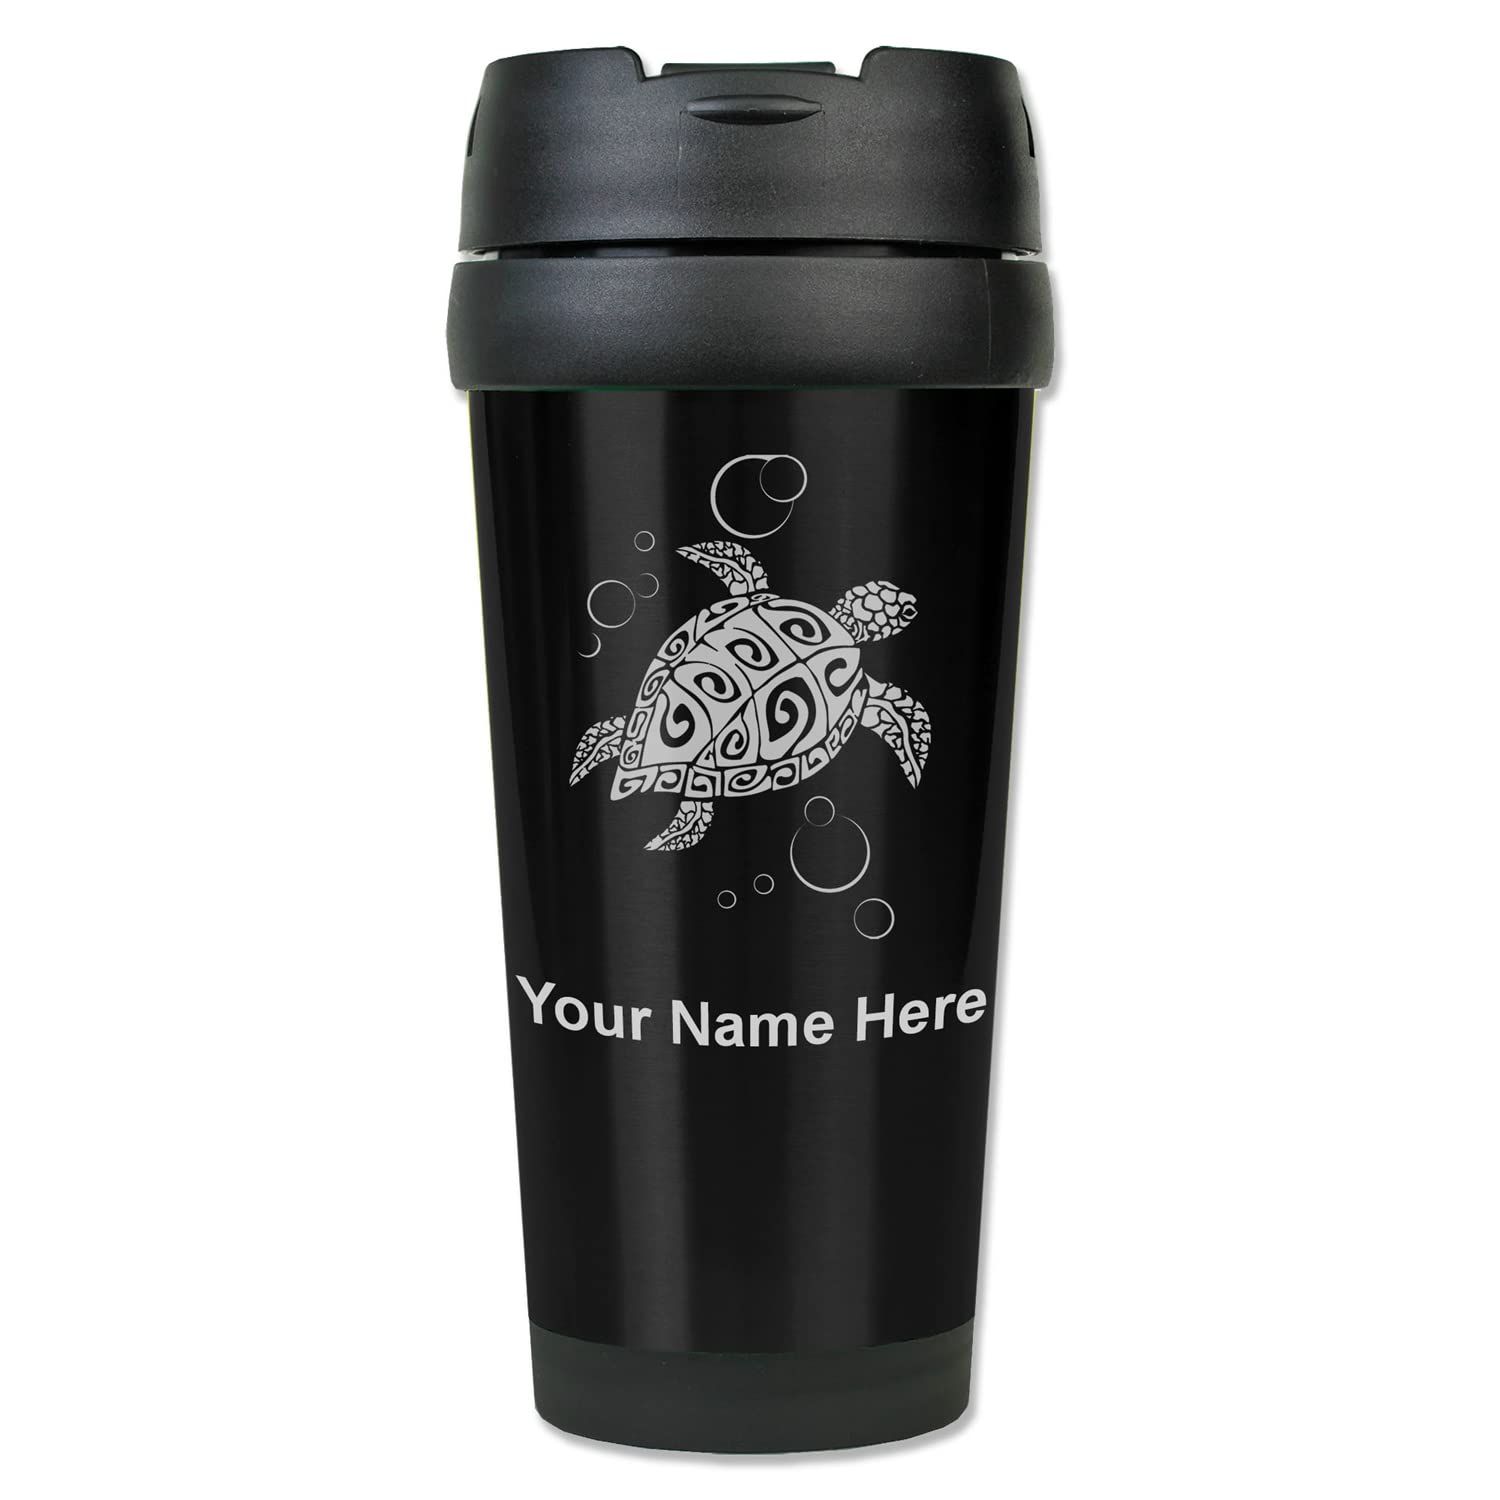 LaserGram 16oz Coffee Travel Mug, Hawaiian Sea Turtle, Personalized Engraving Included (Black)